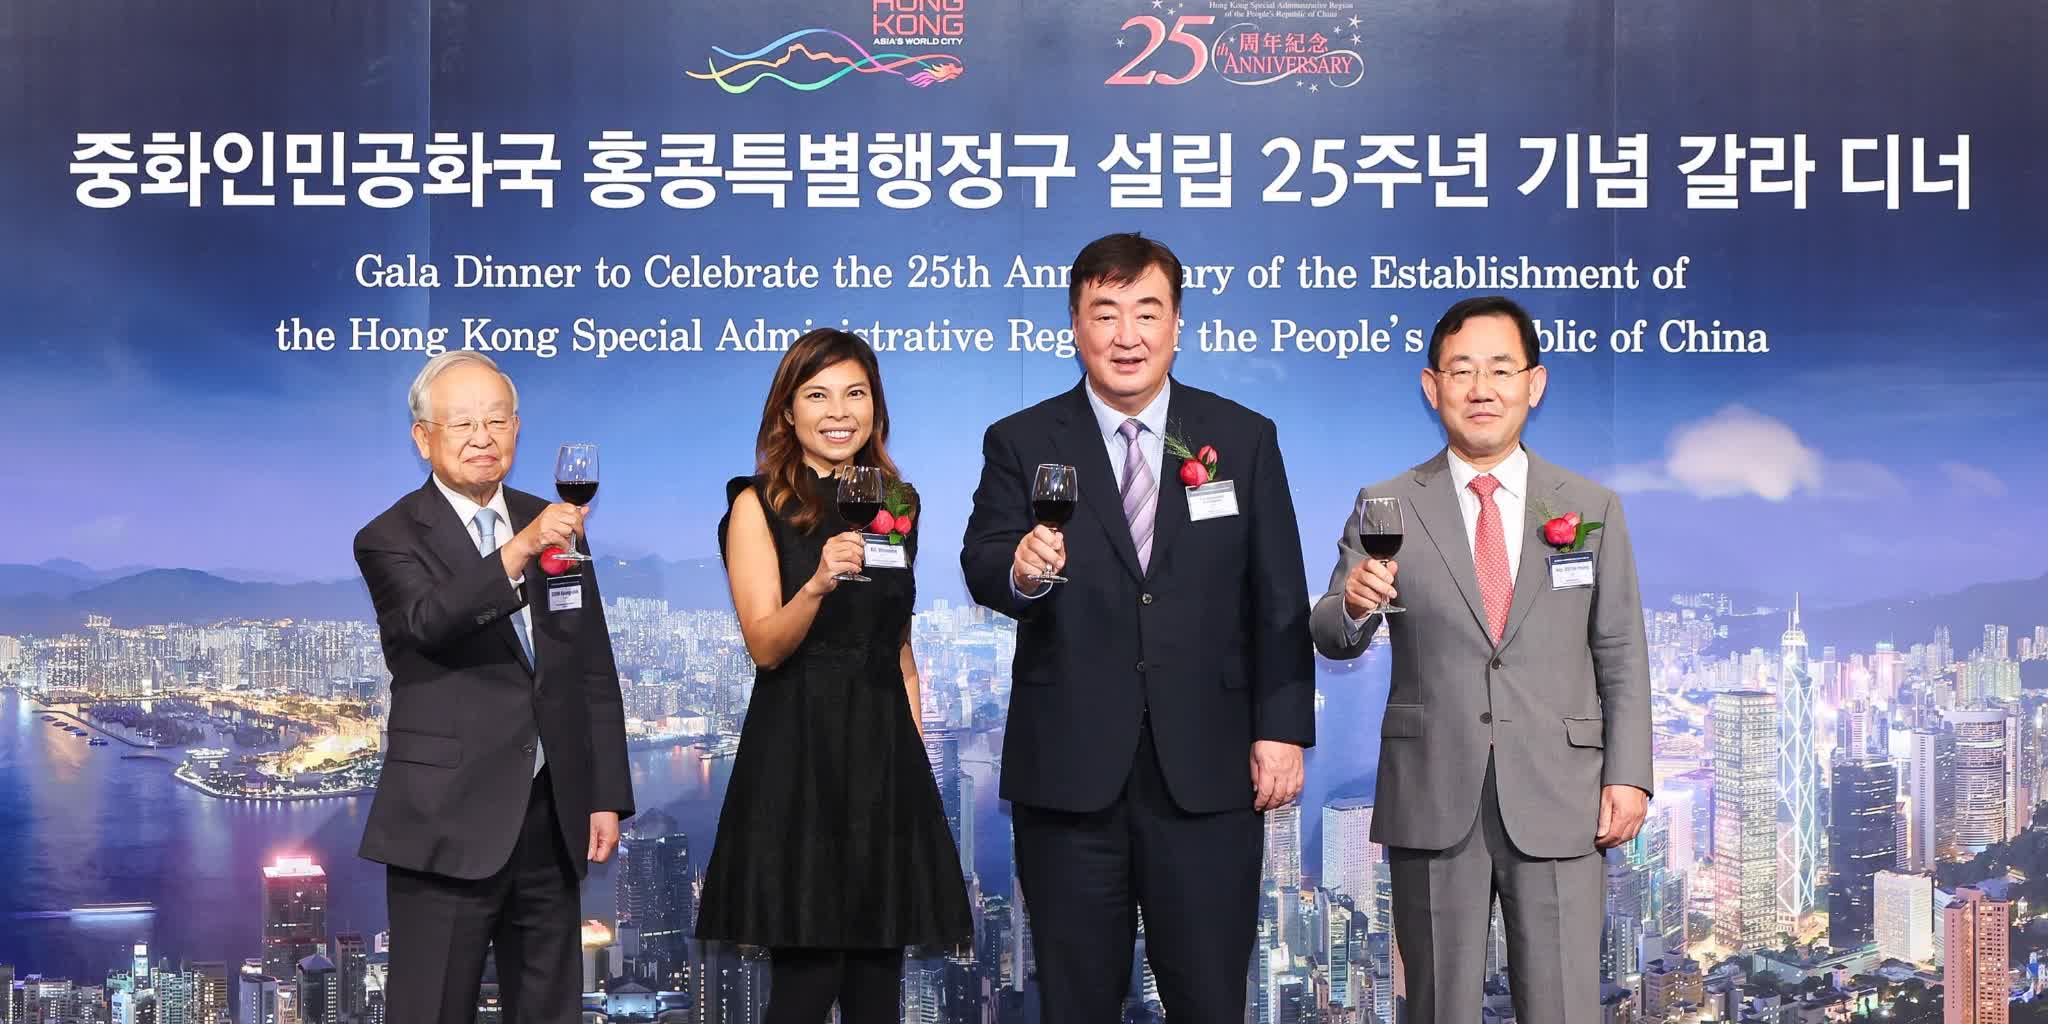 Gala dinner held in Seoul to celebrate 25th anniversary of establishment of HKSAR